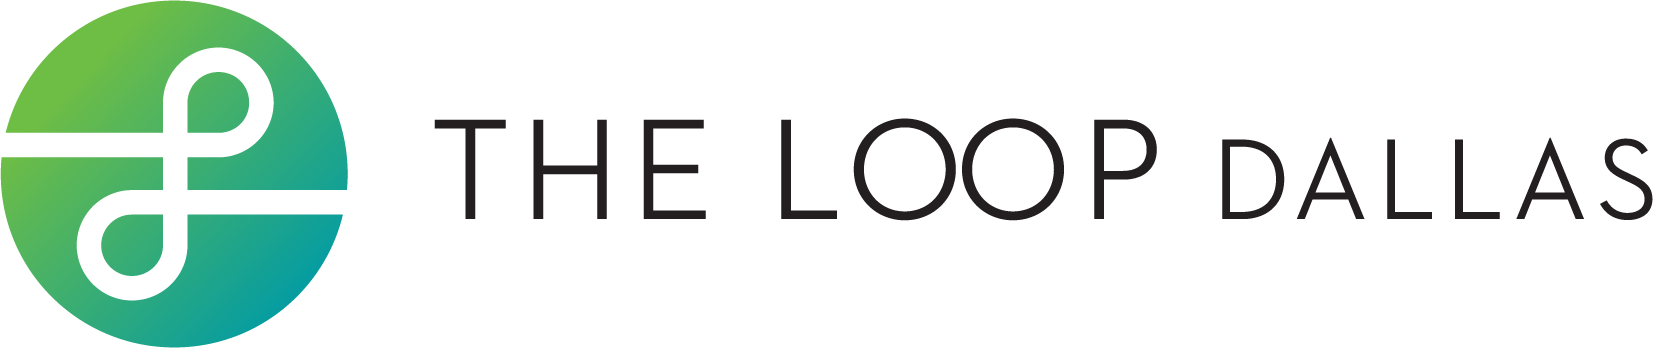 The_Loop_Dallas_logo_final_horz-1.png